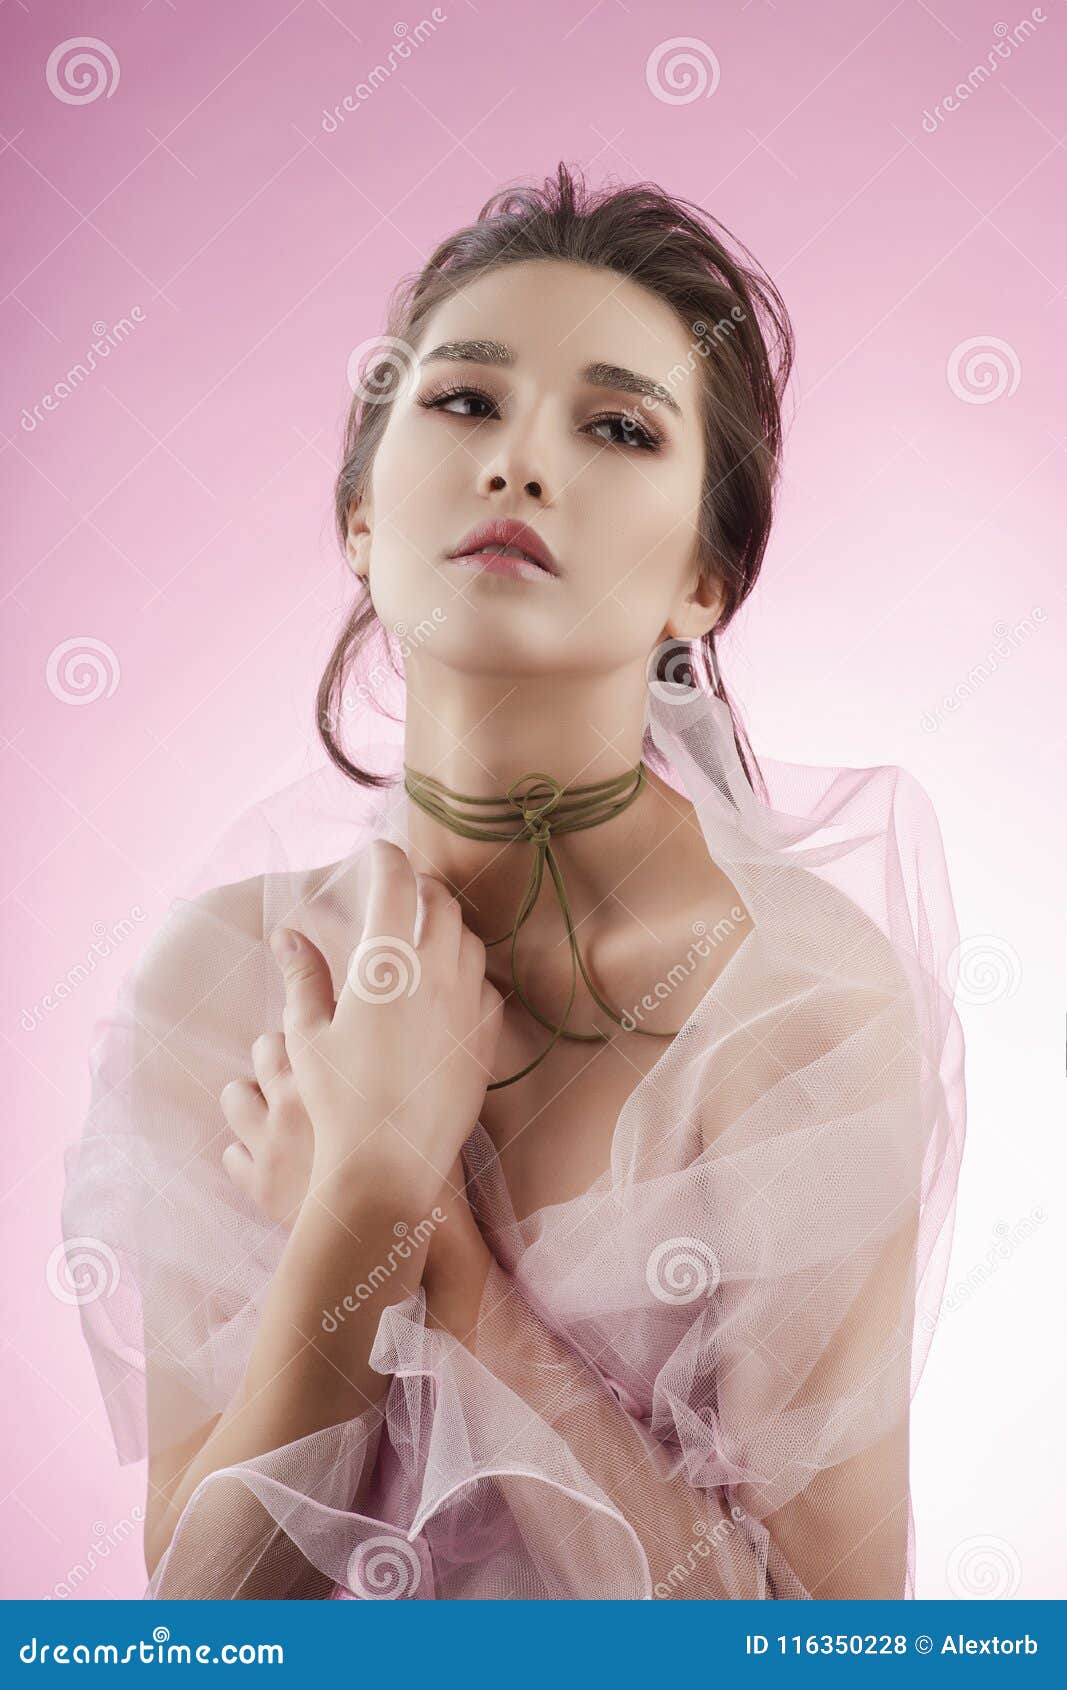 Asian With Big Lips Nude - Beautiful Charming Young Big Breast Asian Girl Wearing A ...